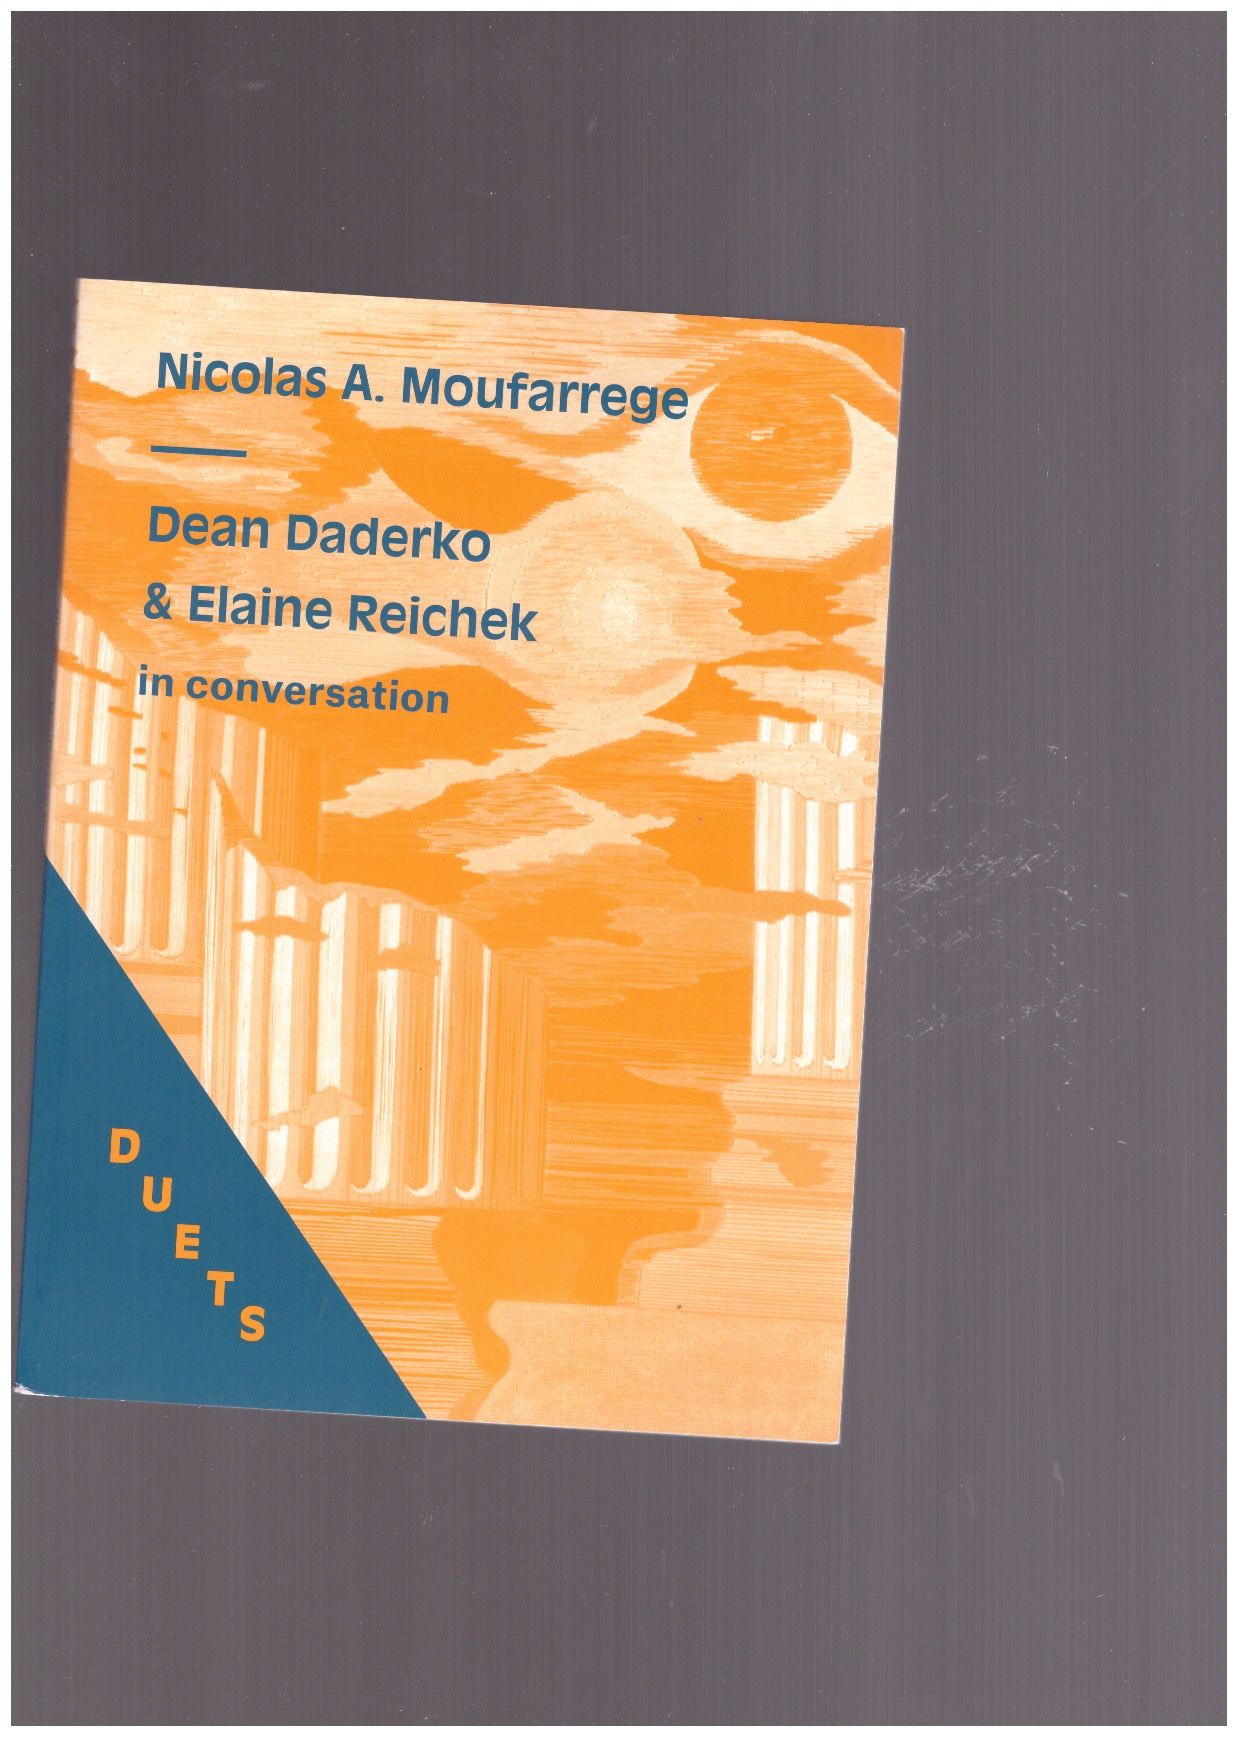 DADERKO, Dean; REICHEK, Elaine - Duets: Nicolas A. Moufarrege / Dean Daderko & Elaine Reichek in conversation